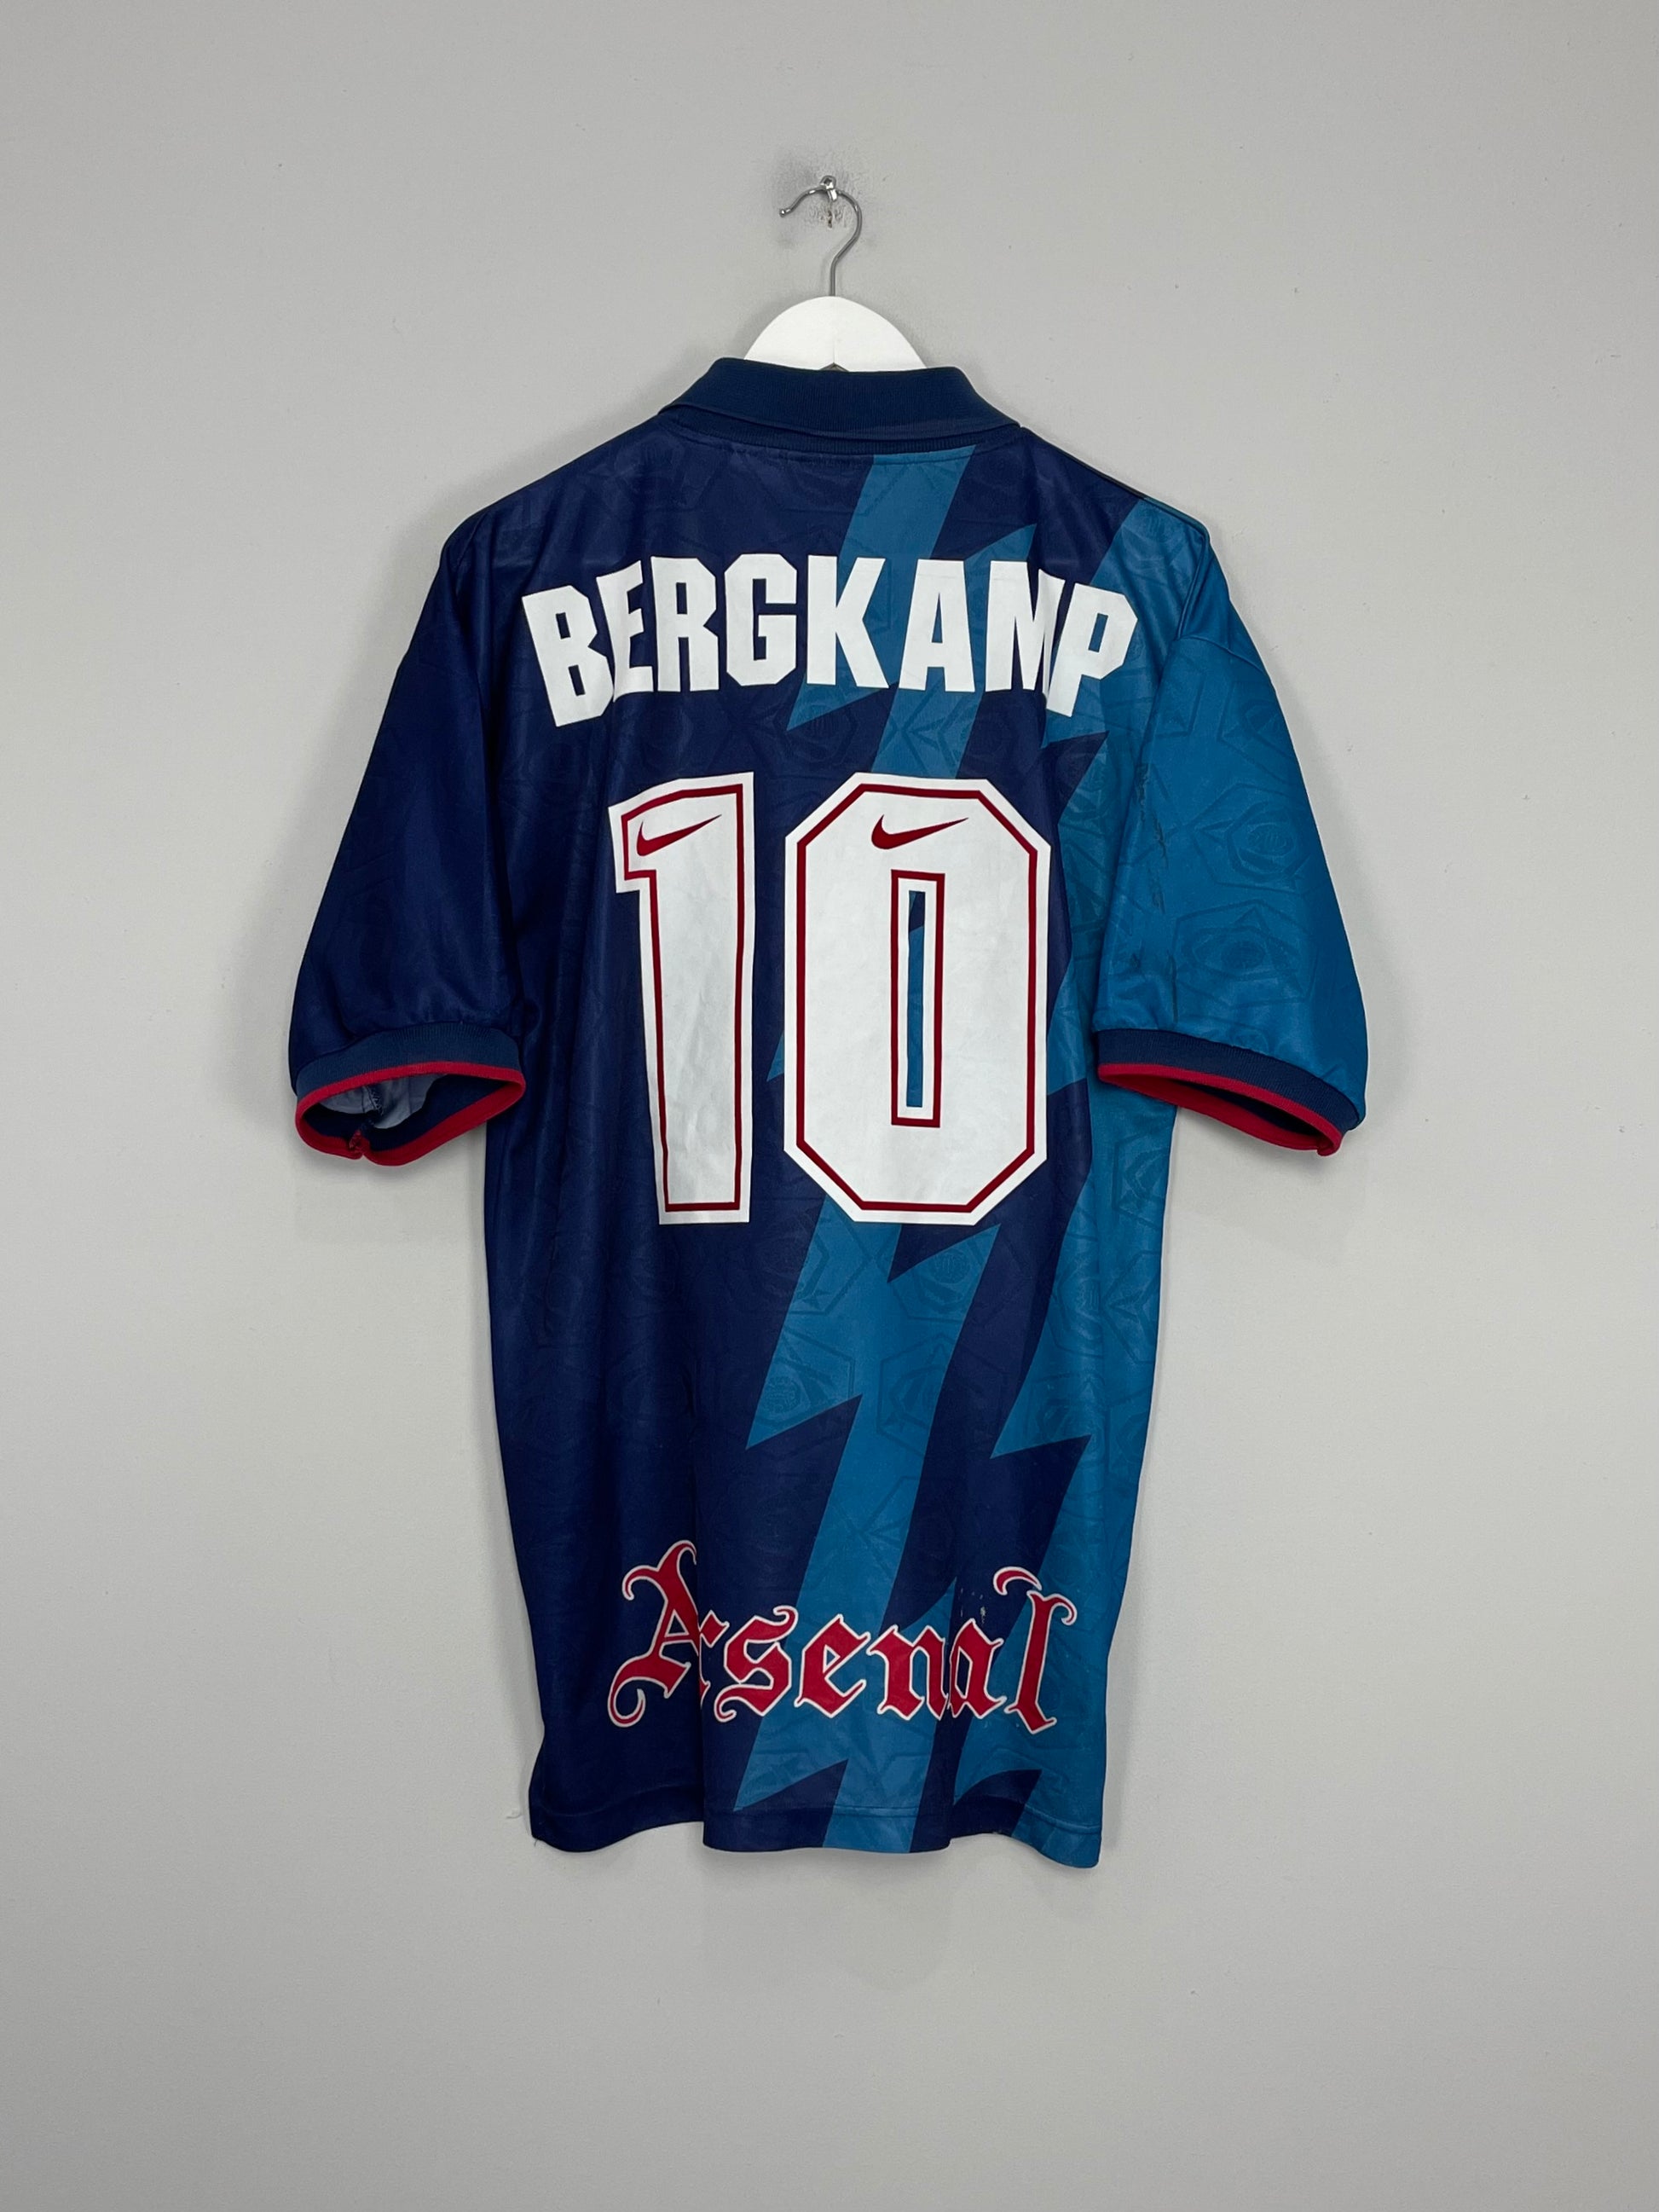 Image of the Arsenal Bergkamp shirt from the 1995/96 season